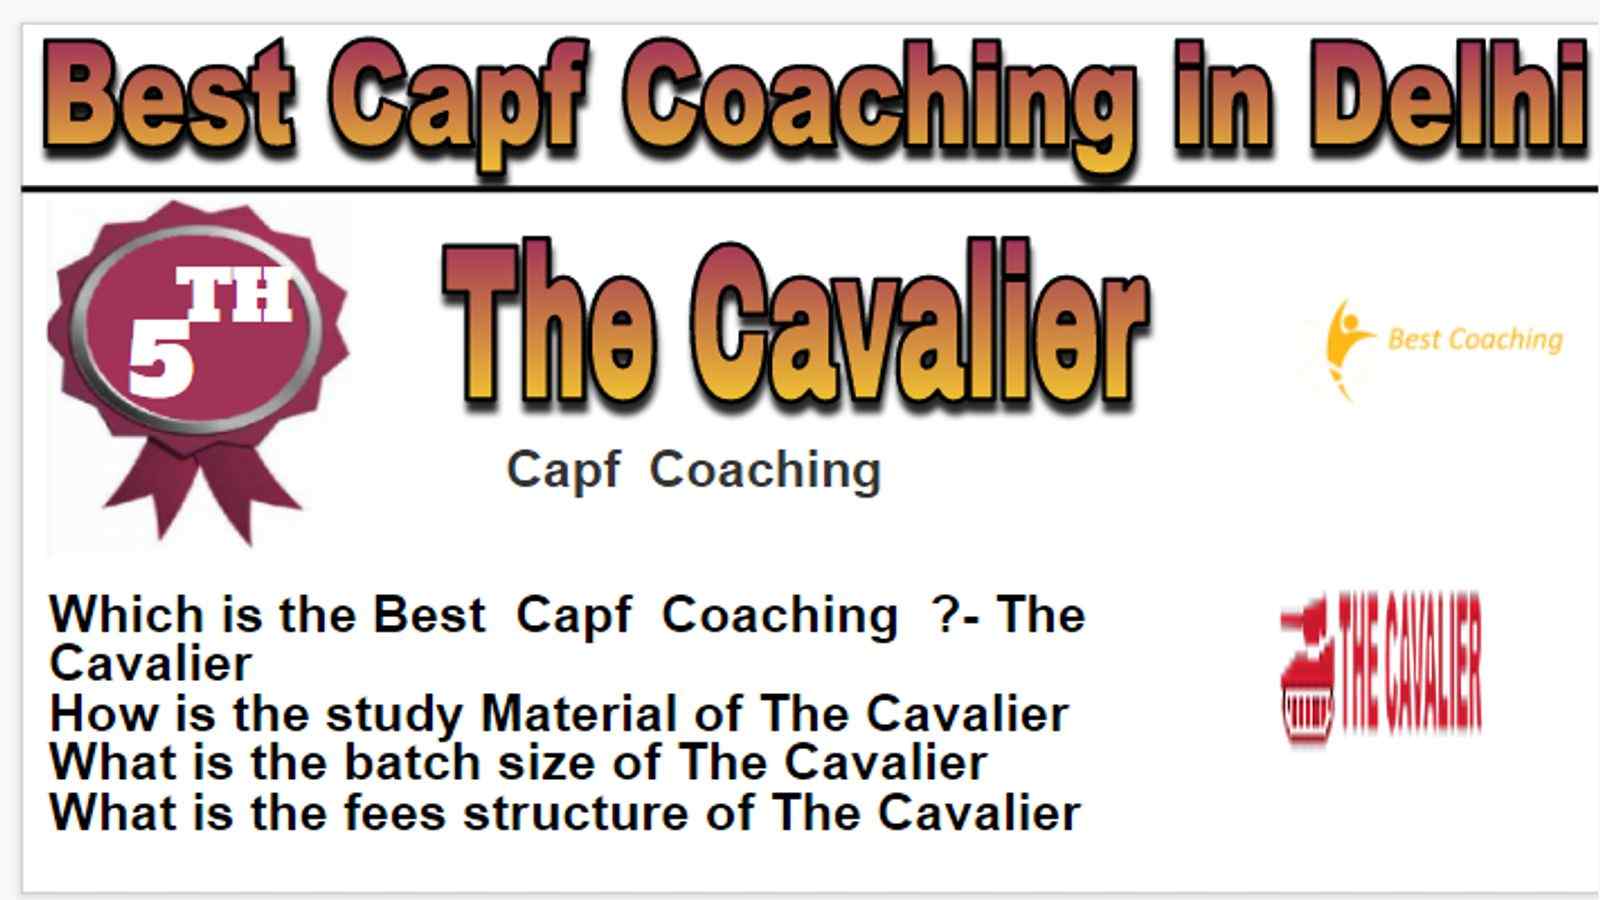 Rank 5 Best Capf Coaching in Delhi